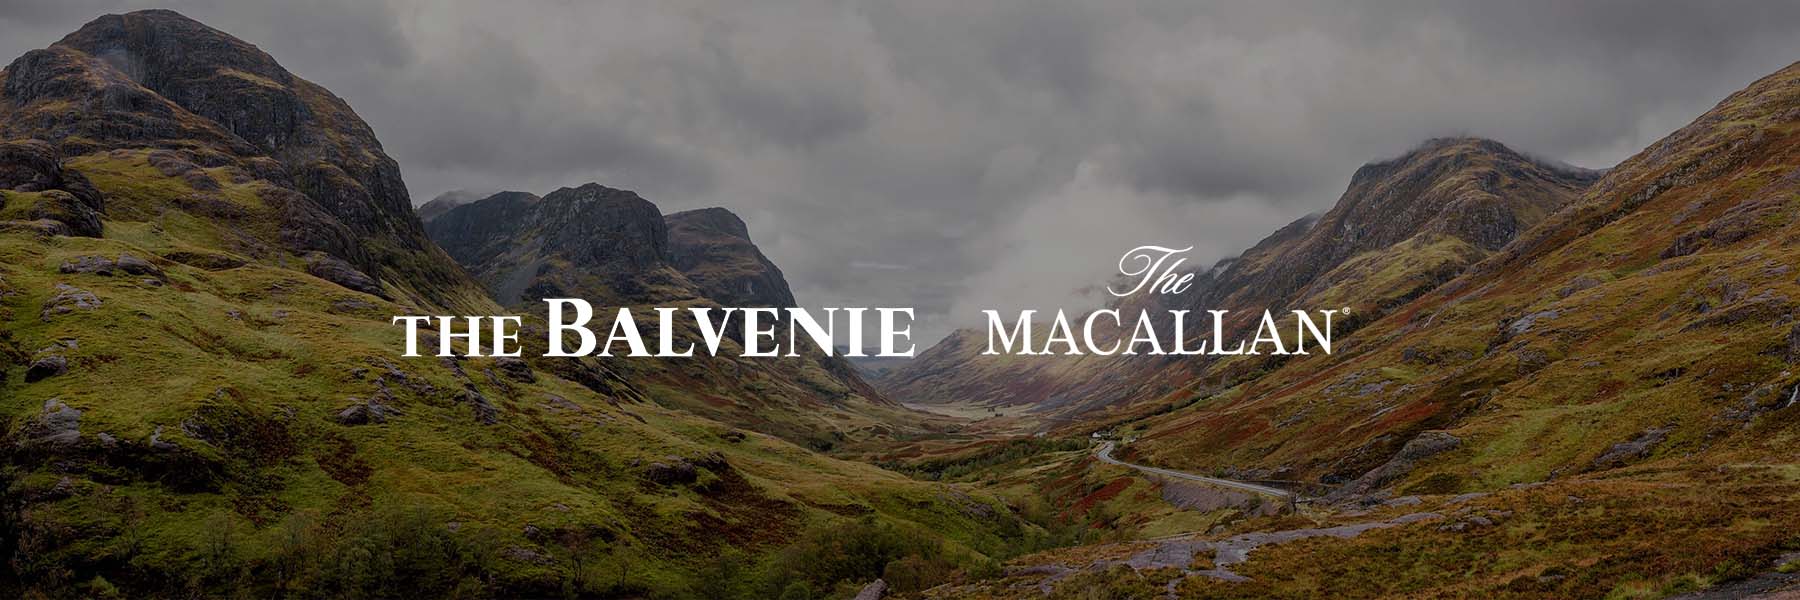 Balvenie vs Macallan: Which is the Speyside is best?